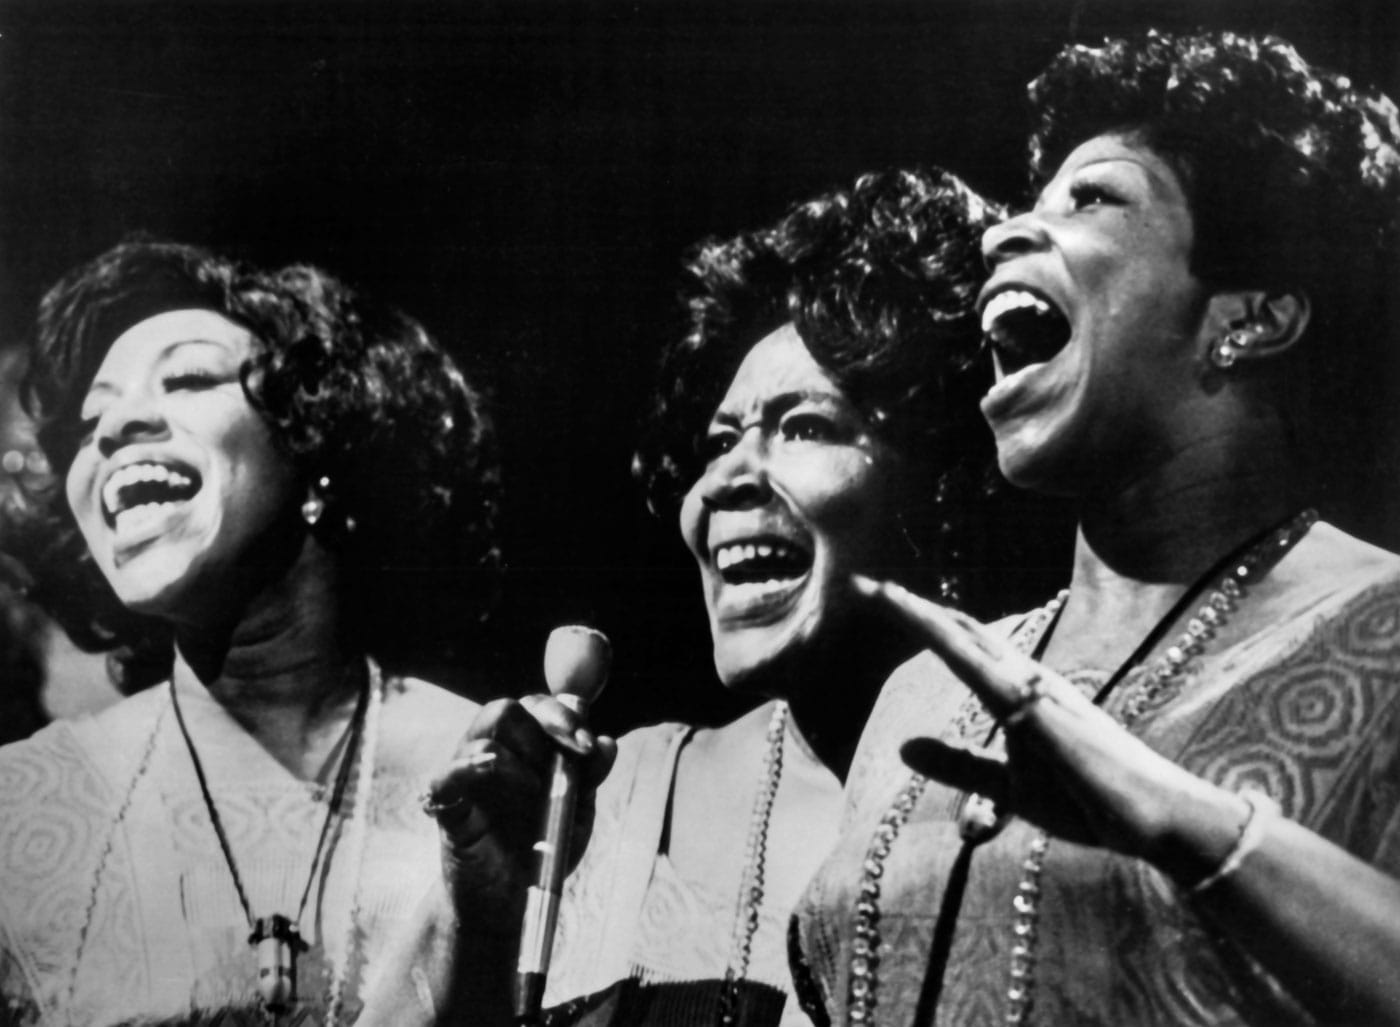 The Barrett Sisters singing